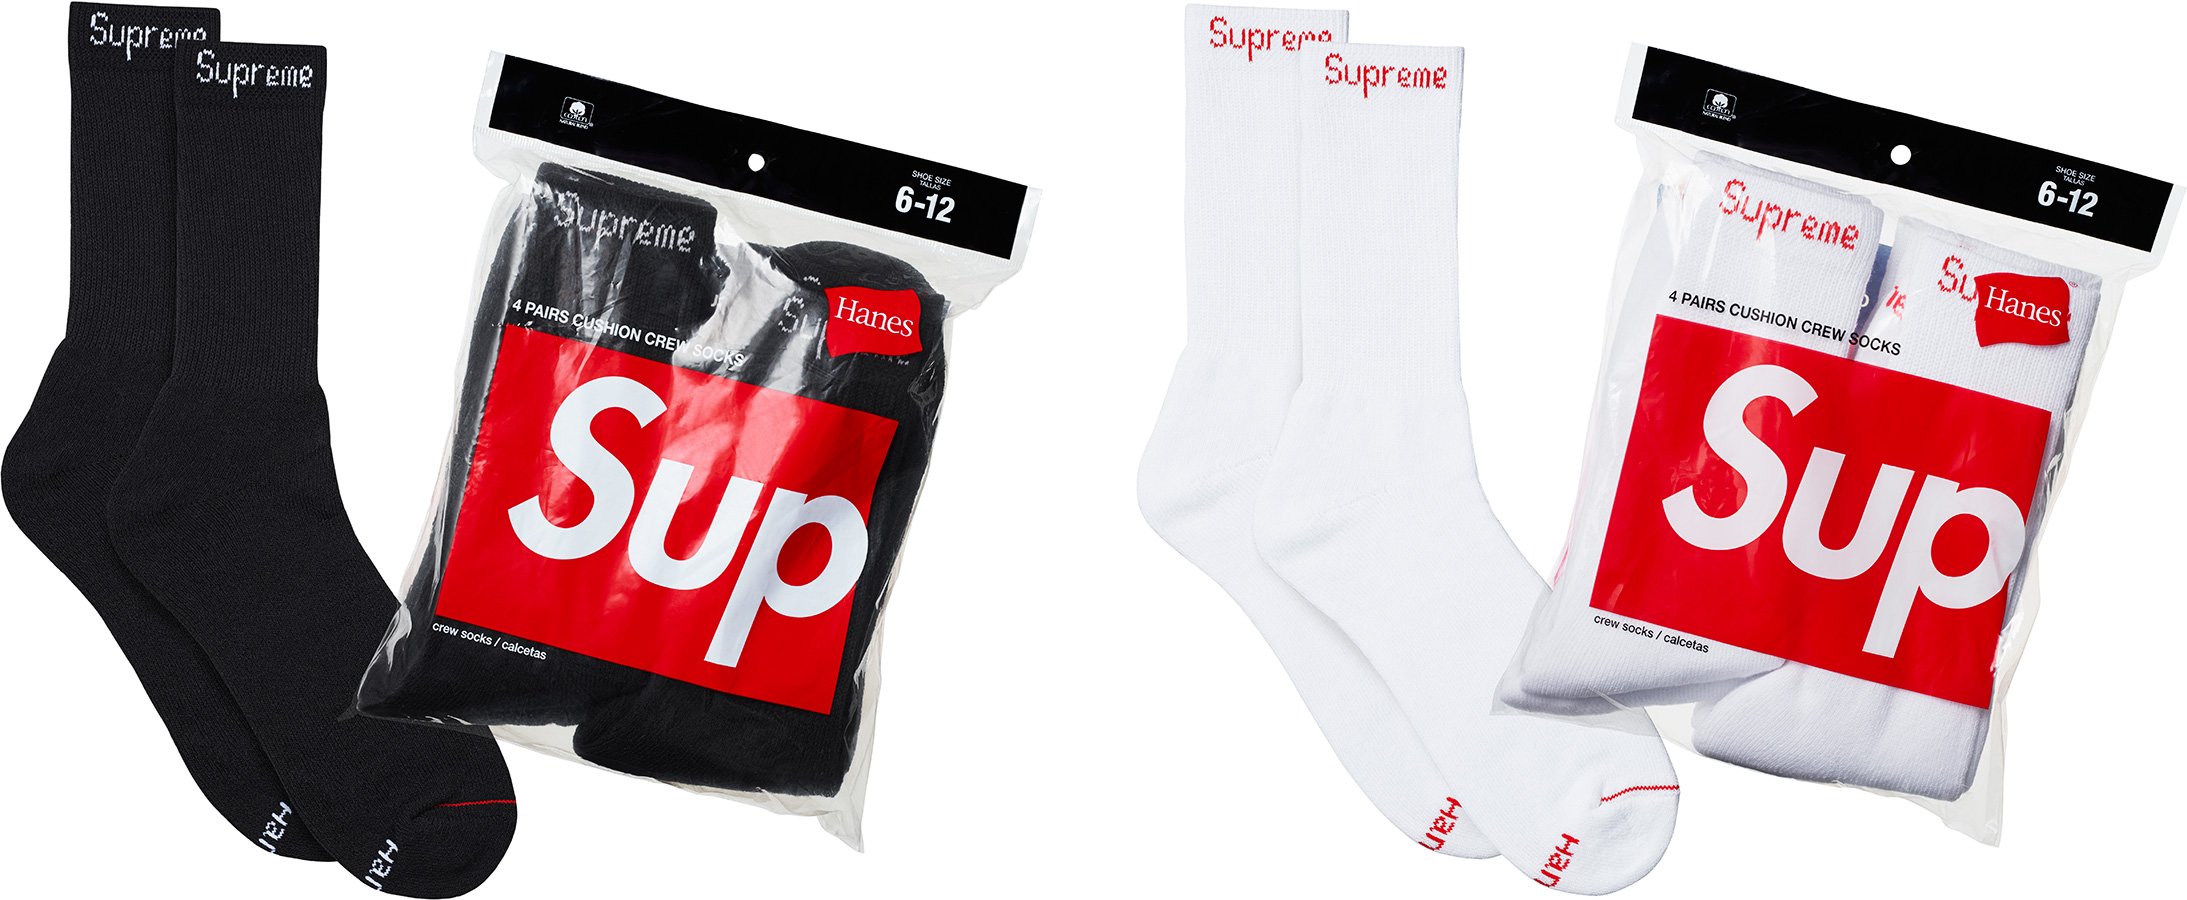 Supreme®/Hanes® Crew Socks (4 Pack) - Supreme Community